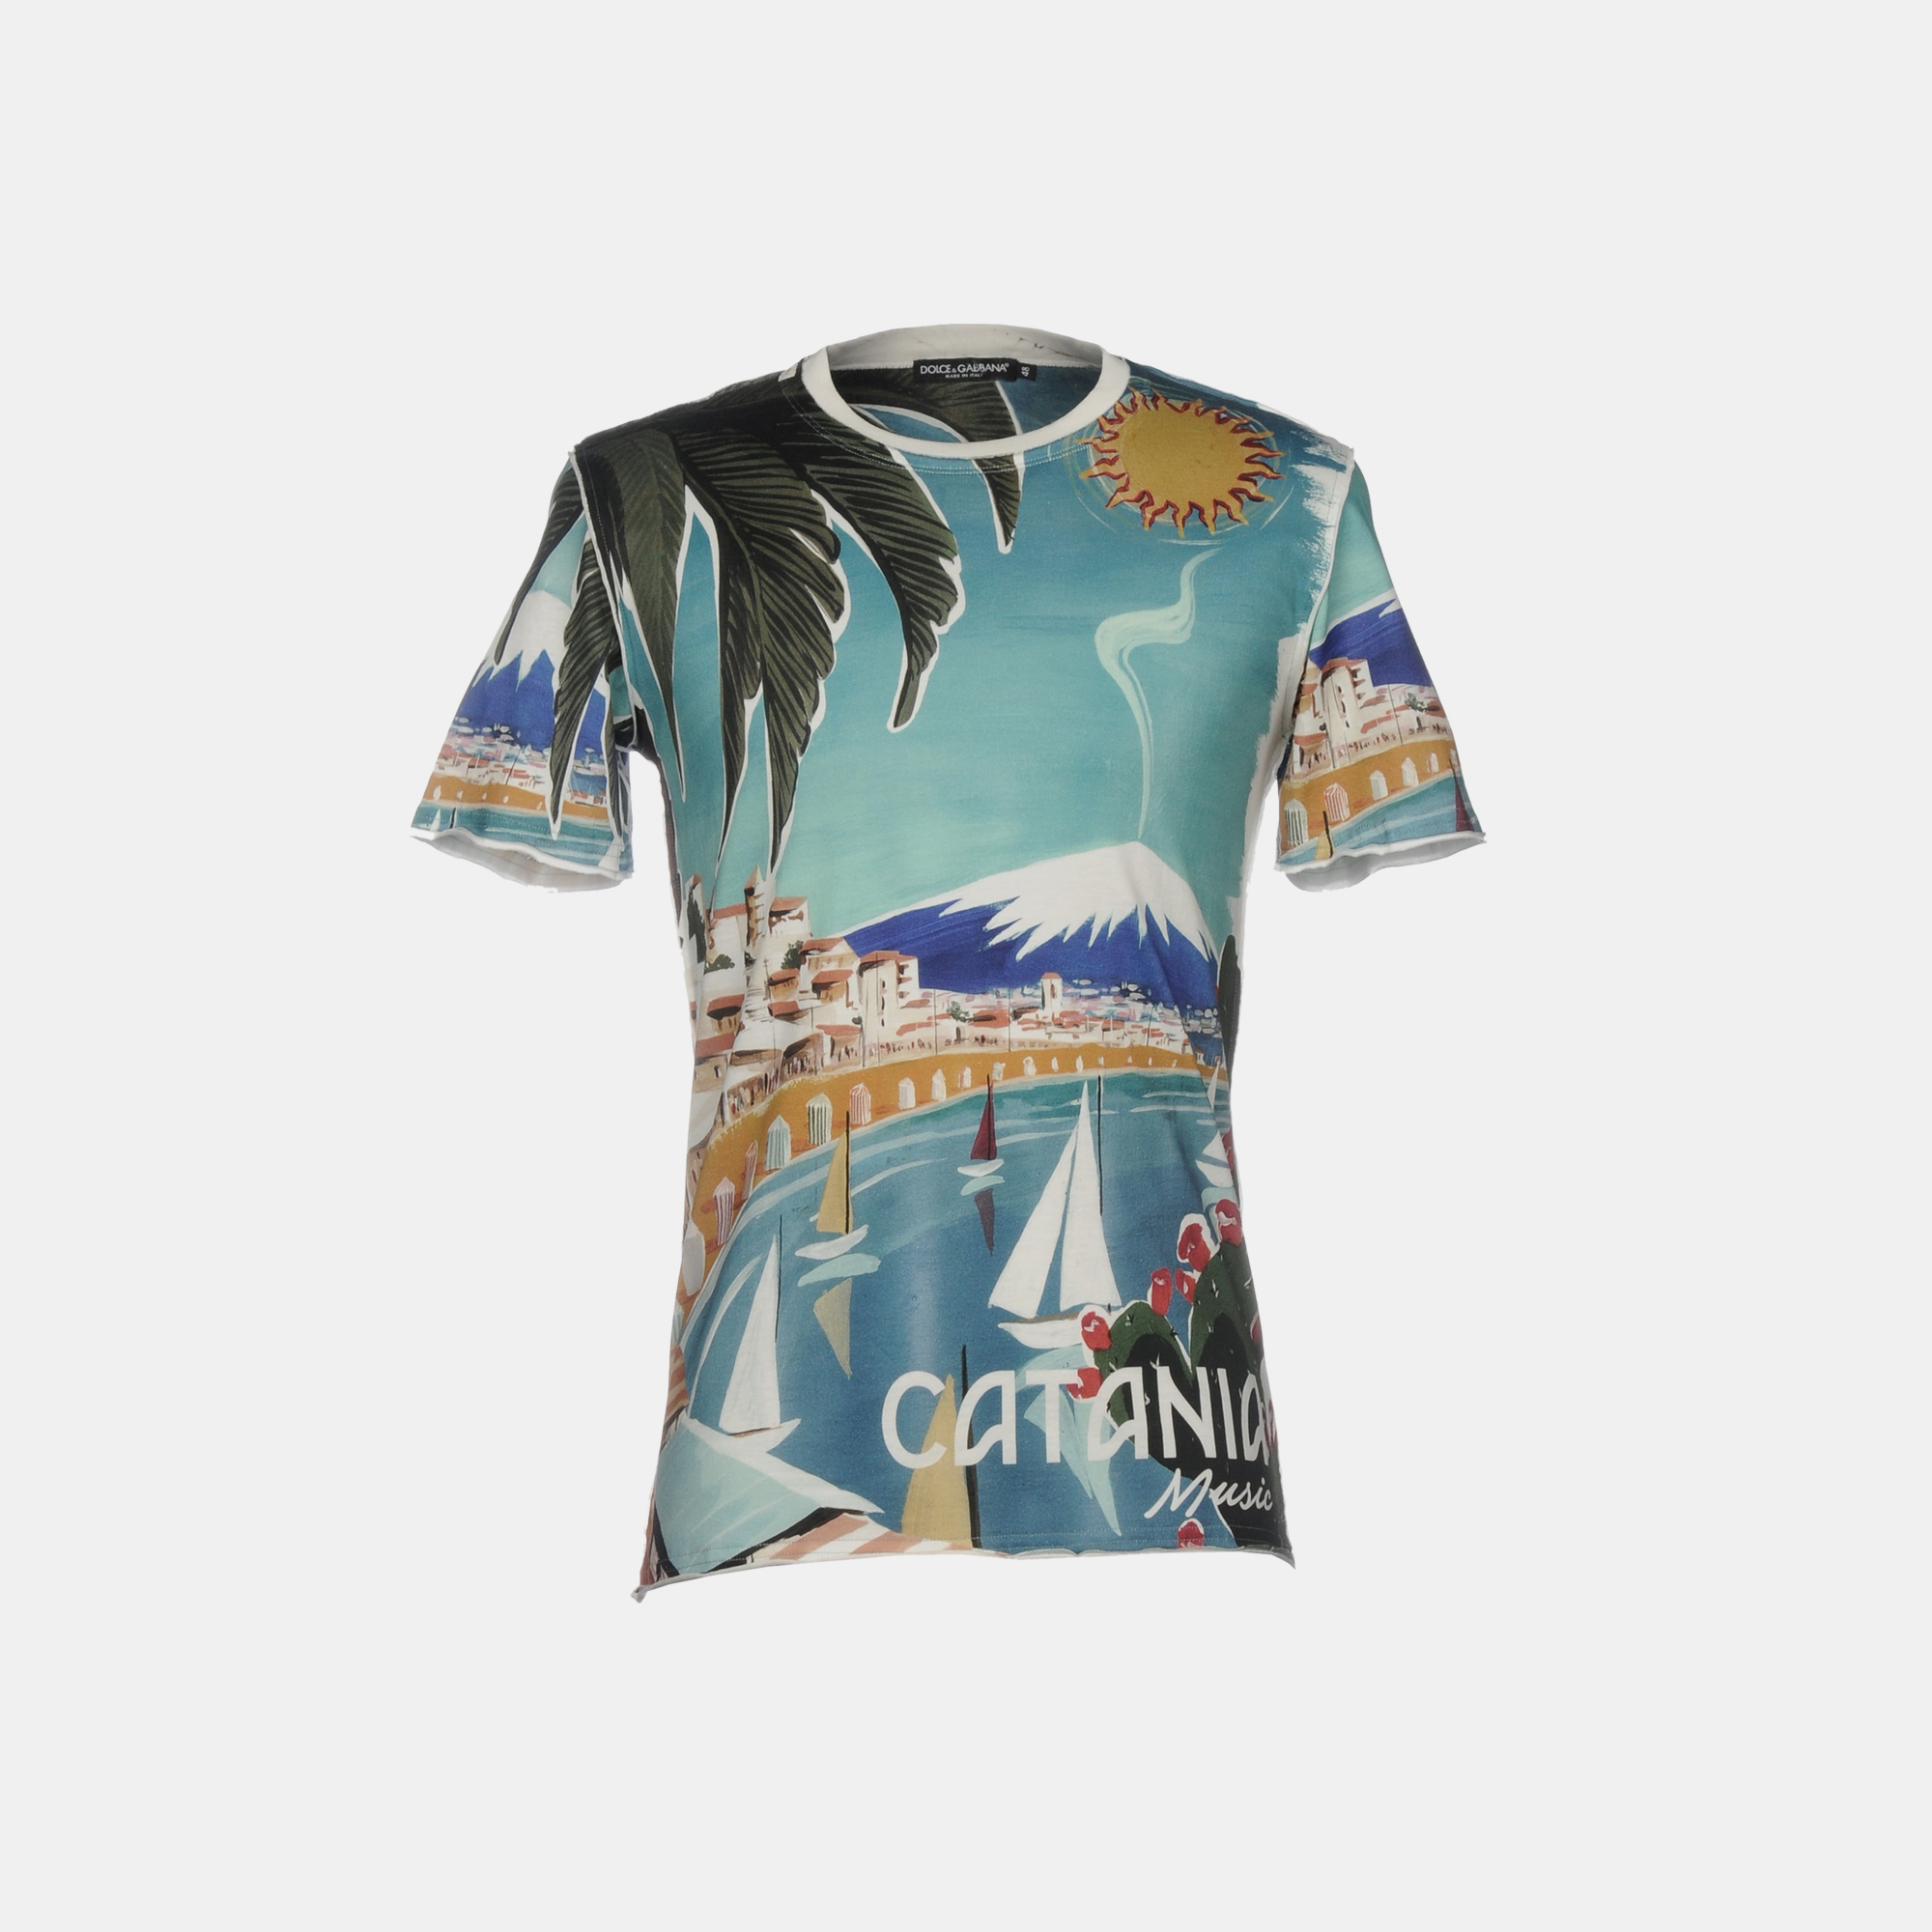 

Dolce & Gabbana Teal Blue Catania Print Cotton T-Shirt S (IT 46)